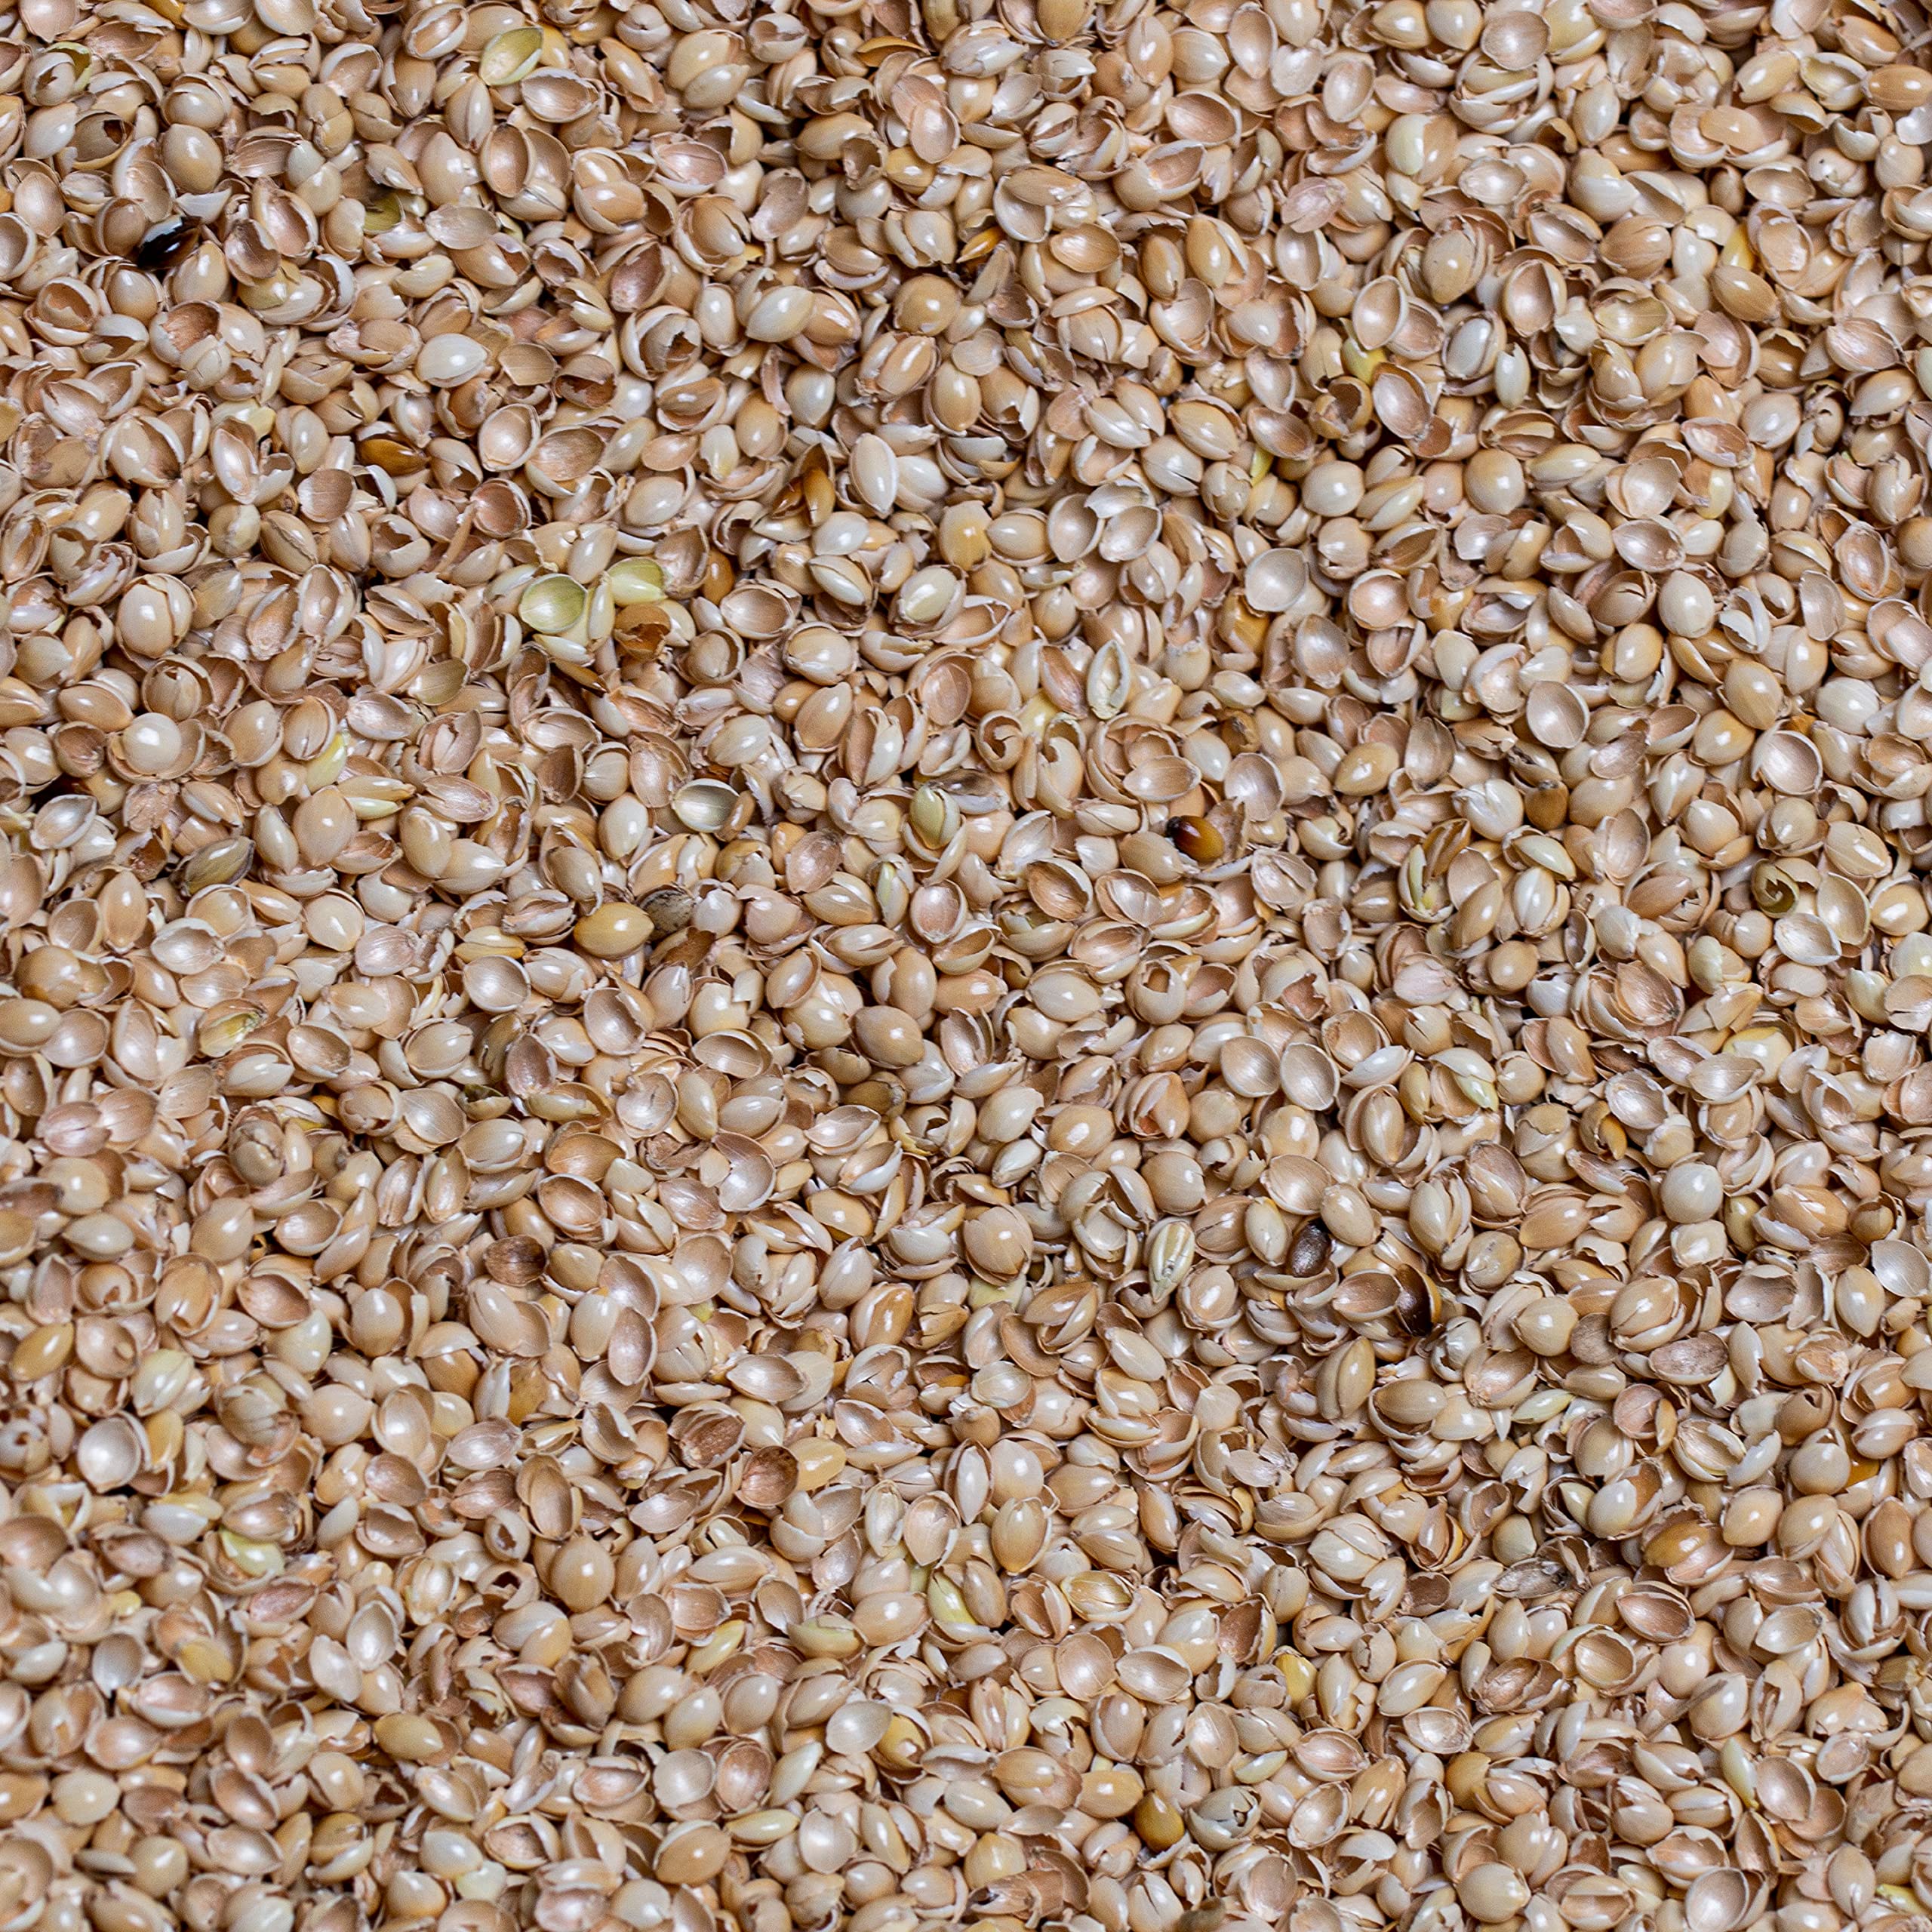 Bean Products Buckwheat Hull Filling (1 lb)